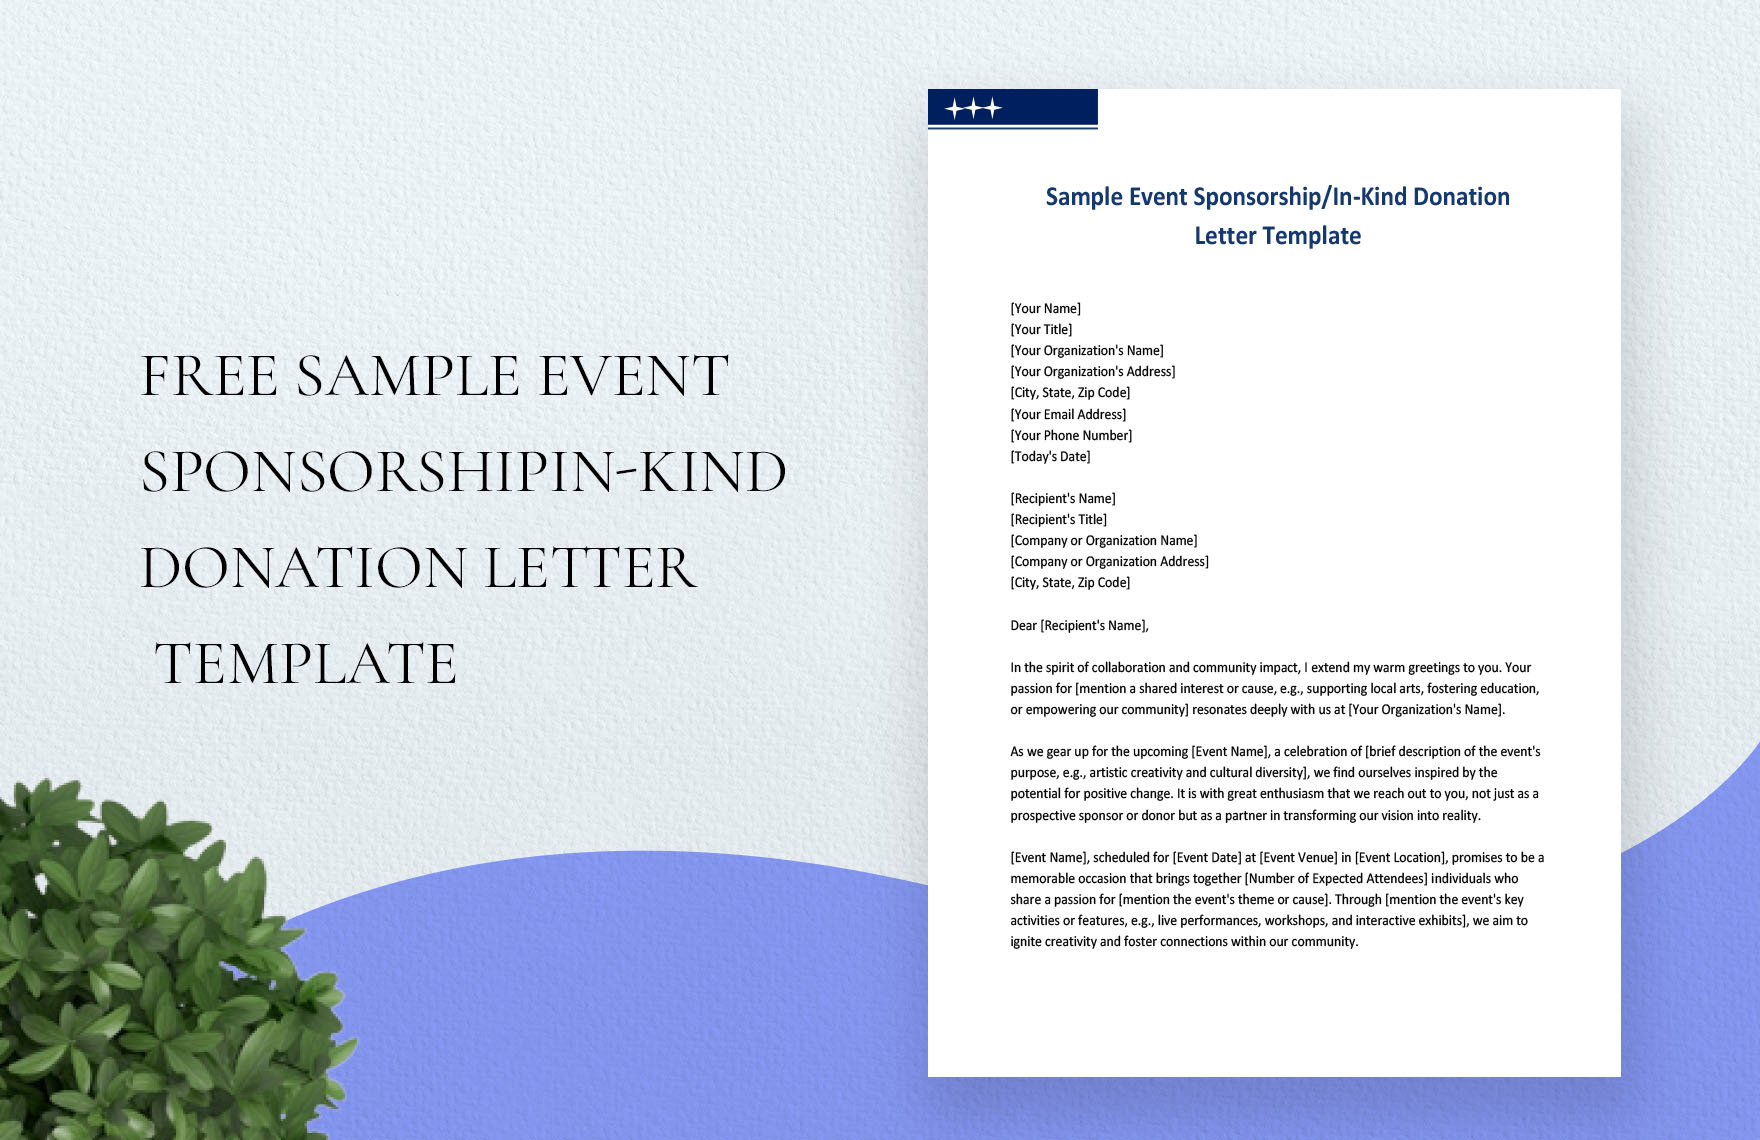 Sample Event Sponsorship/In-Kind Donation Letter Template